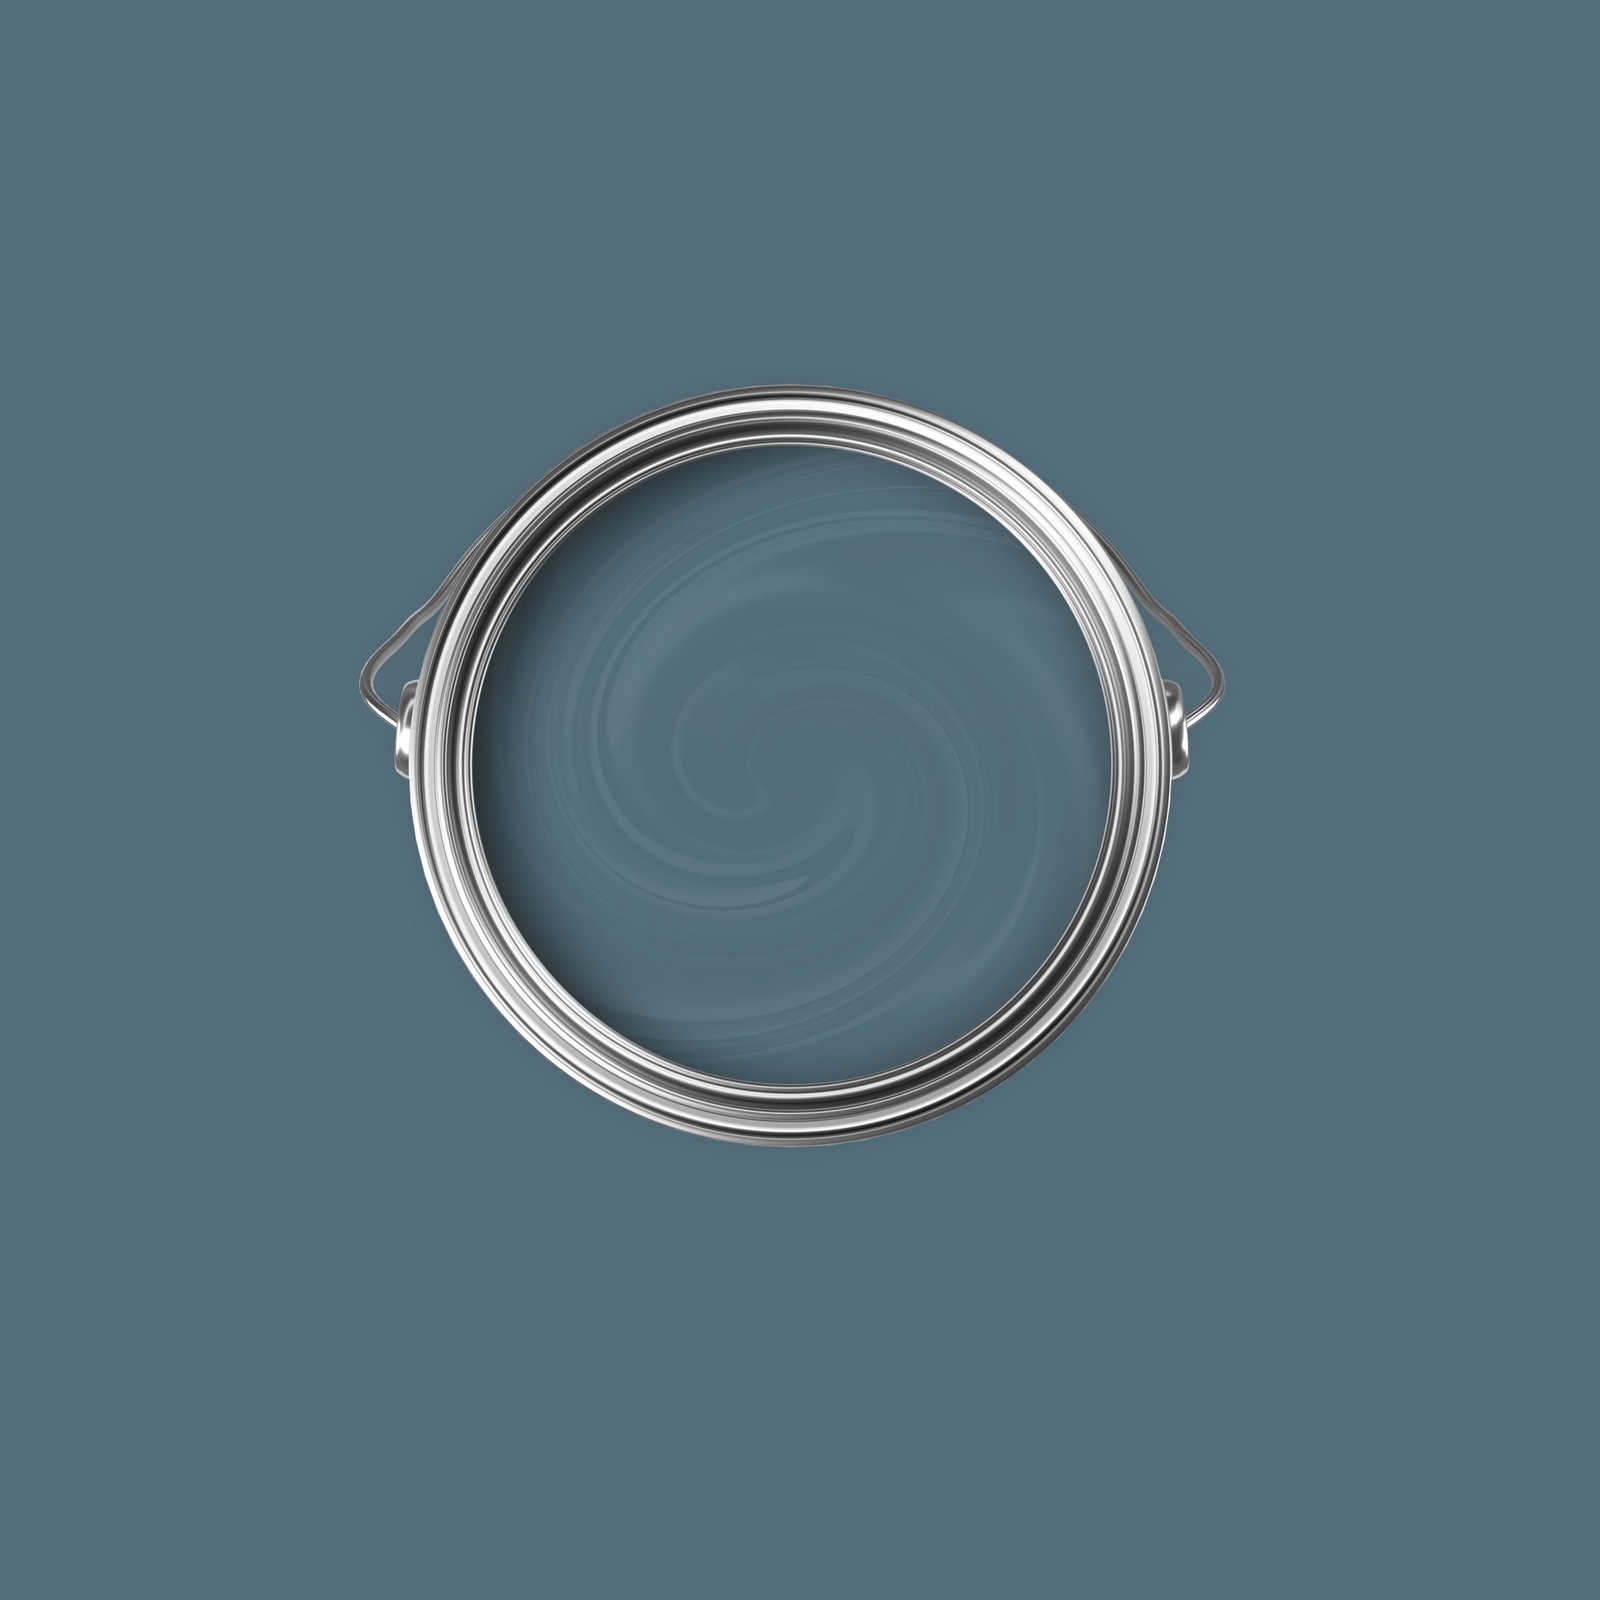             Pittura murale Premium Equilibrata Tortora »Balanced Blue« NW312 – 2,5 Litri
        